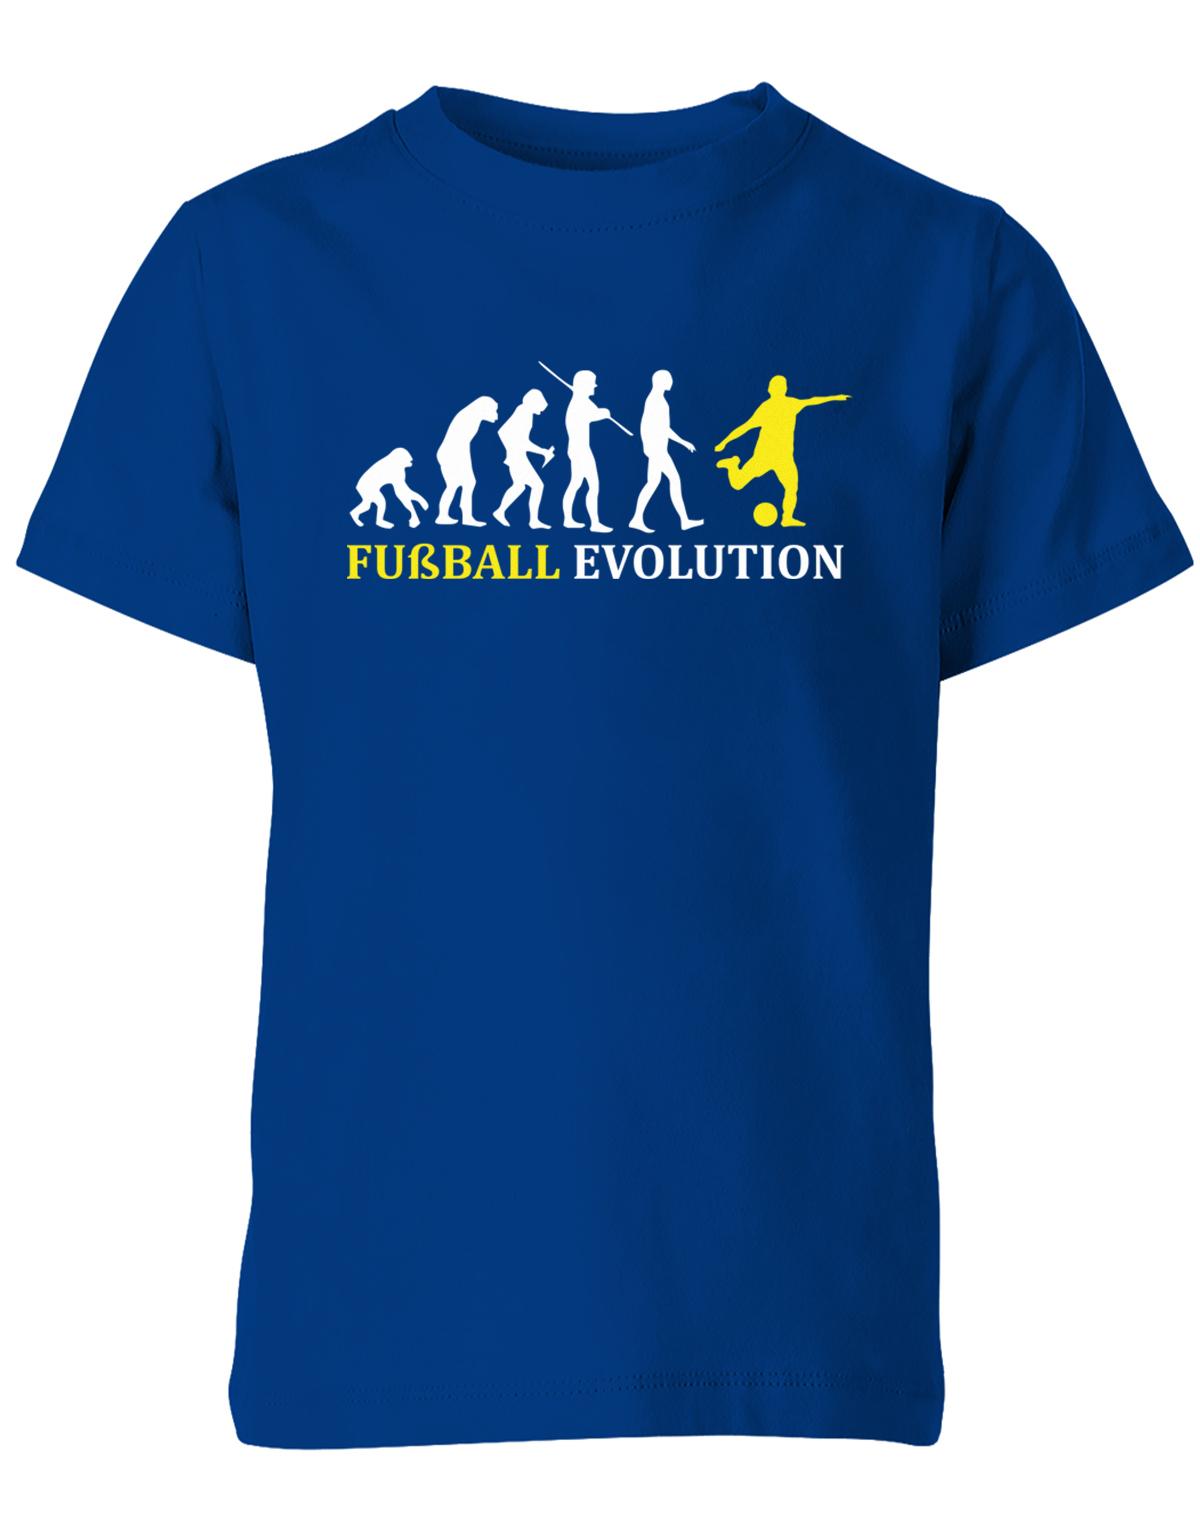 Fussball-Evolution-Kinder-Shirt-Royalblau-Gelb